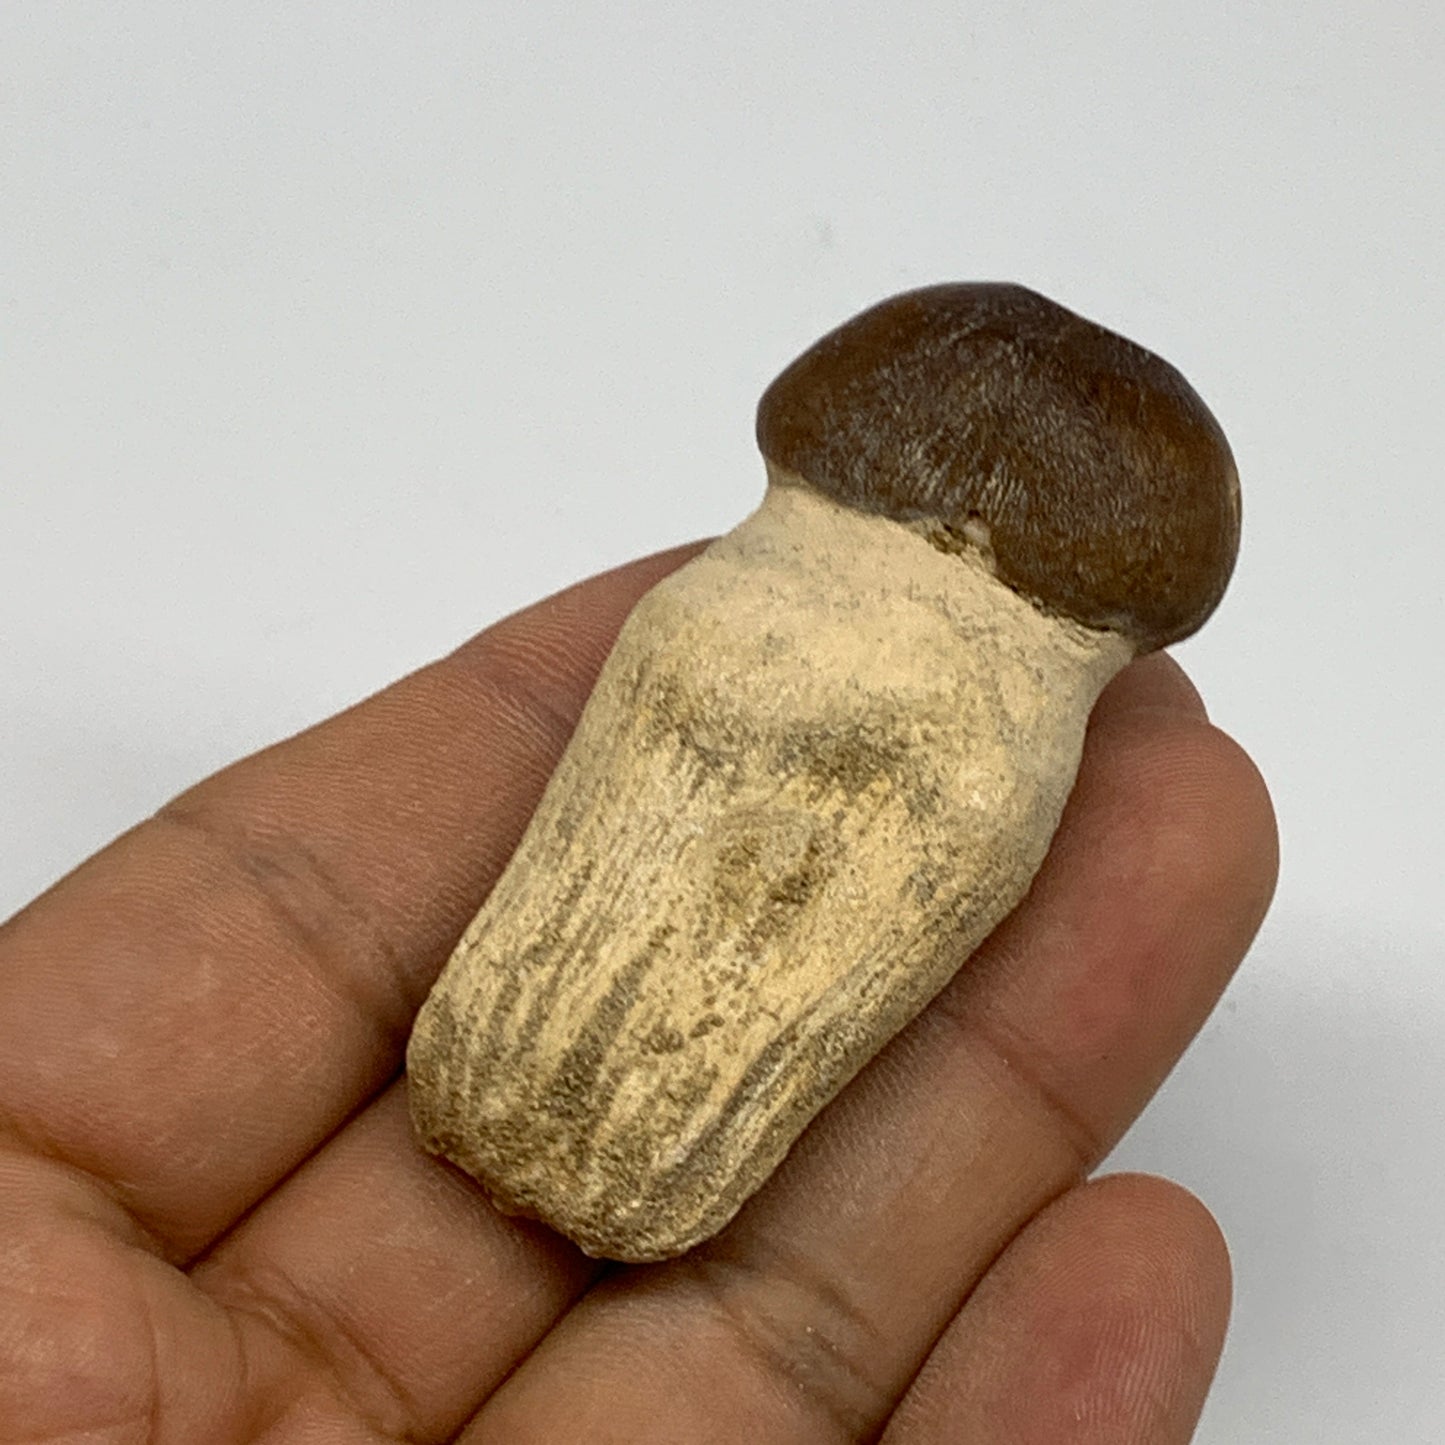 35.4g, 2.3"X1.1"x0.9" Fossil Globidens phosphaticus (Mosasaur ) Tooth, Cretaceou